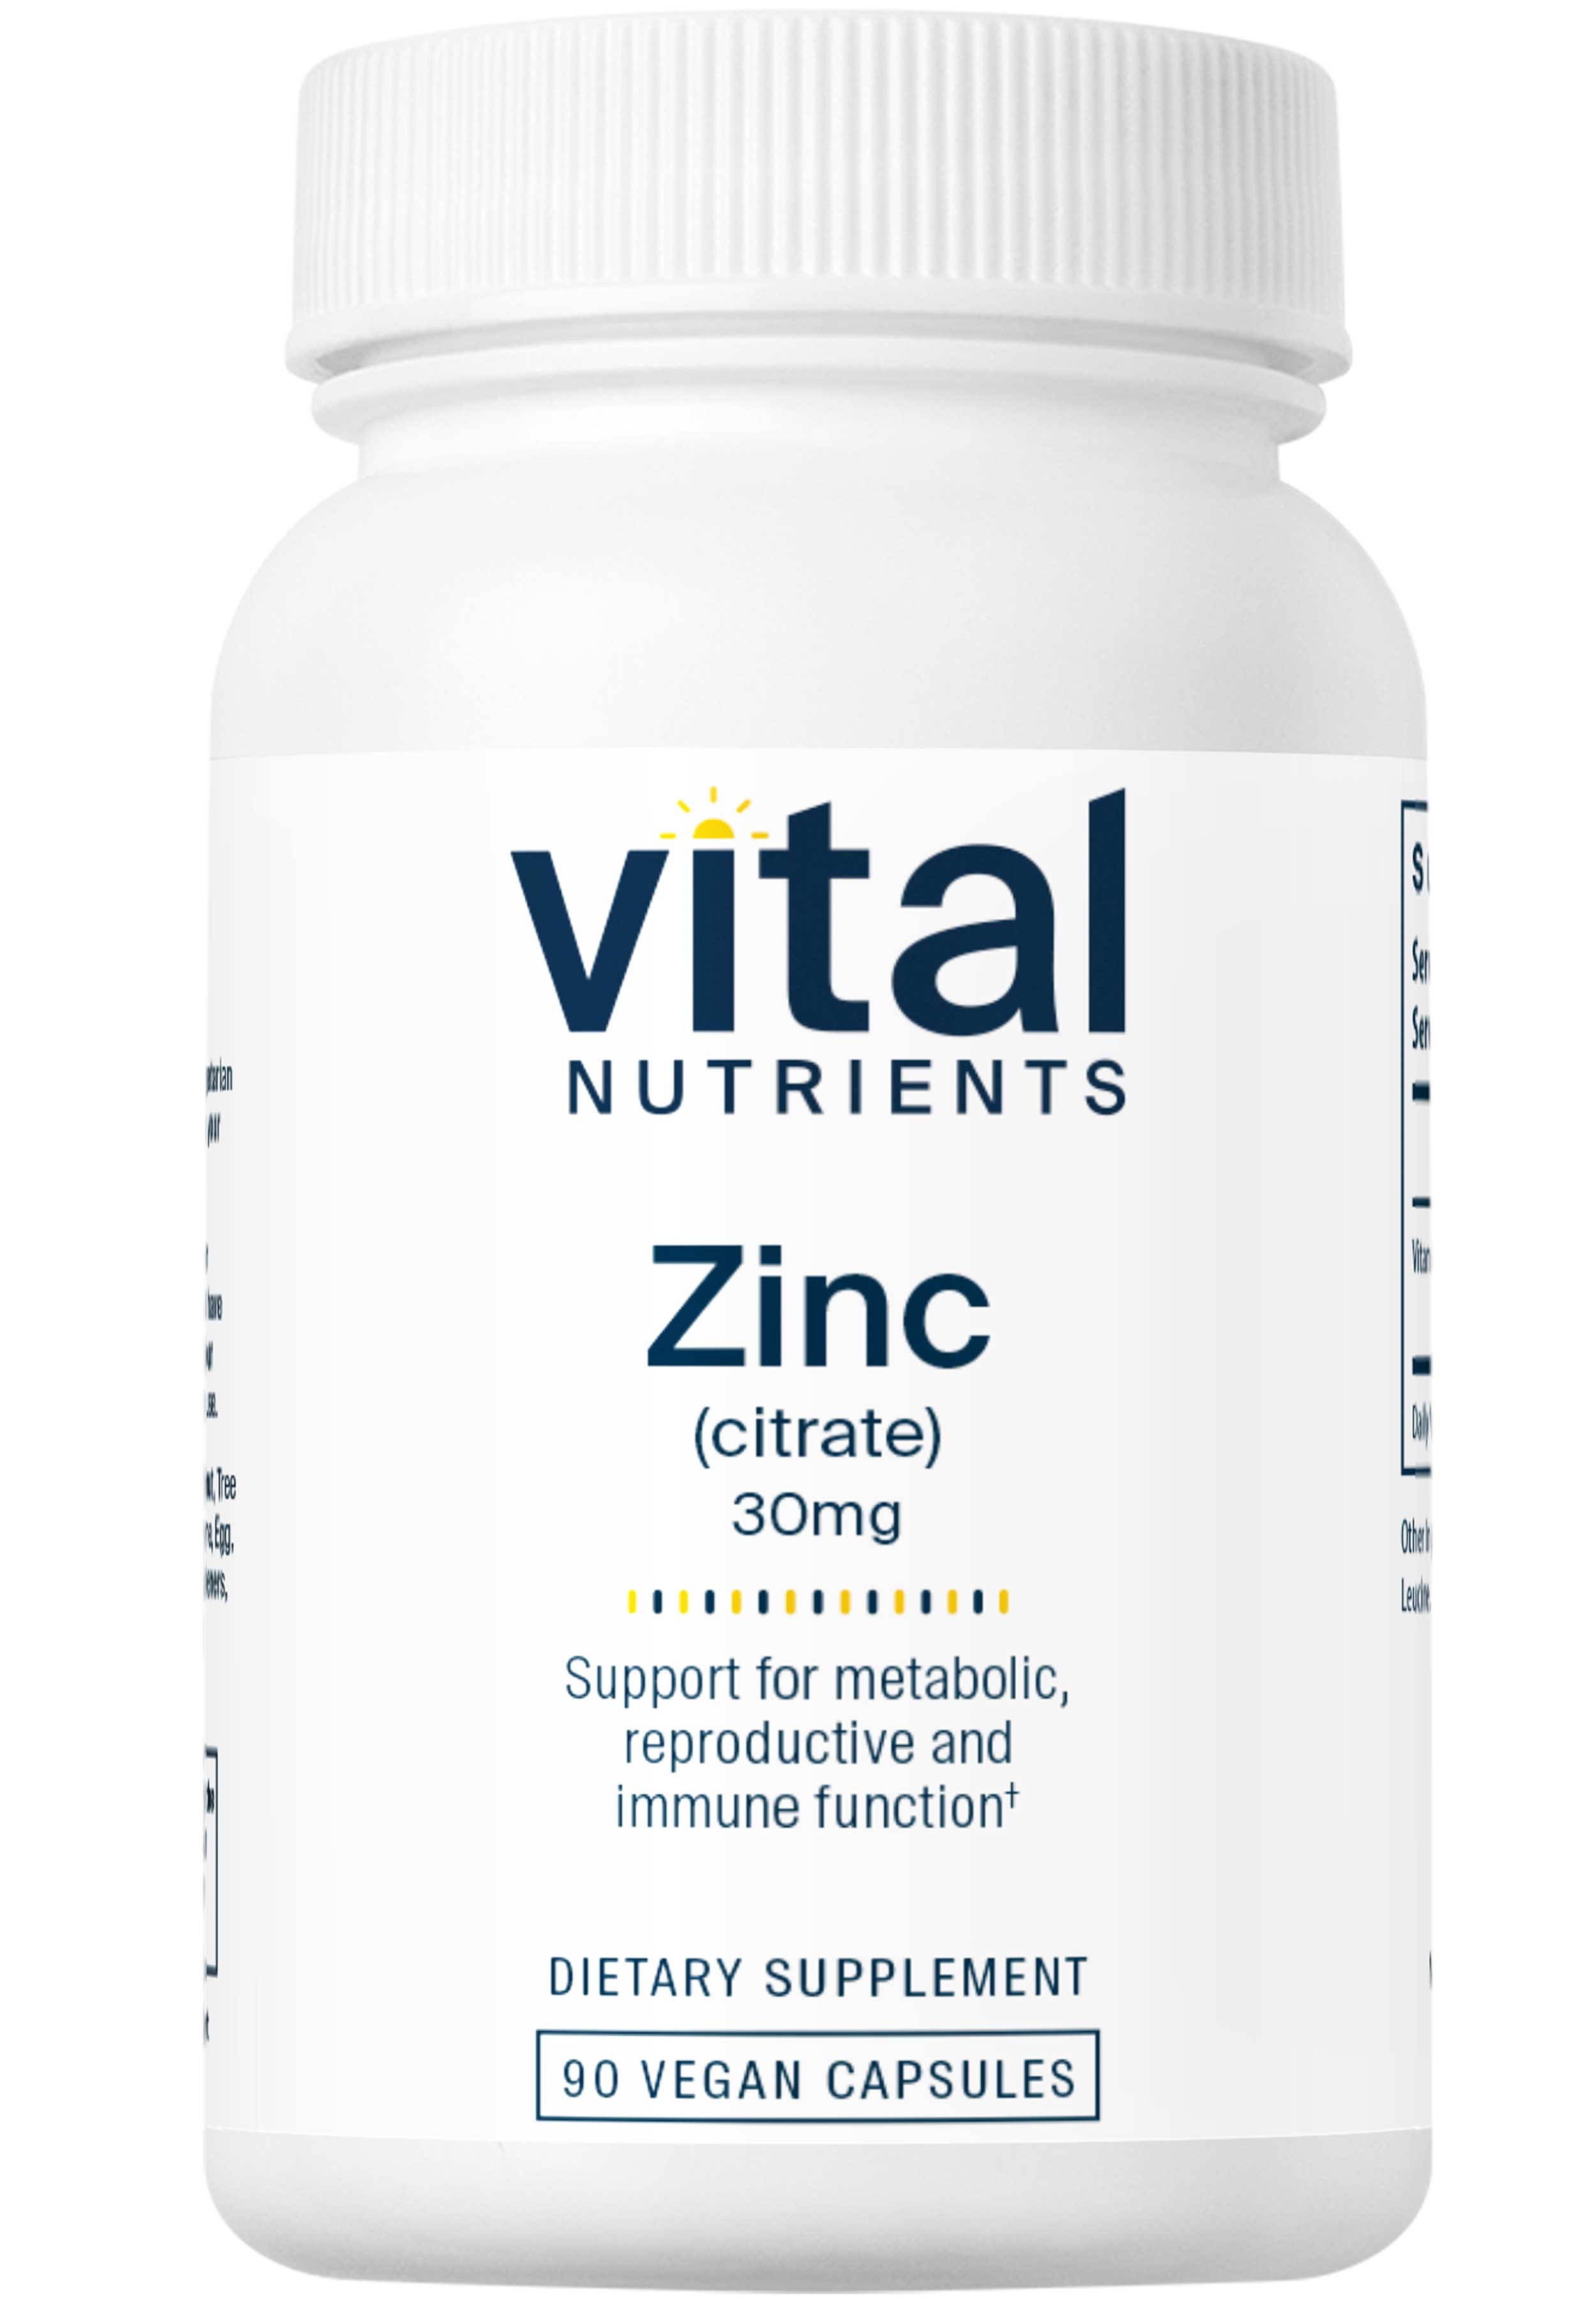 Vital Nutrients Zinc Citrate 30mg